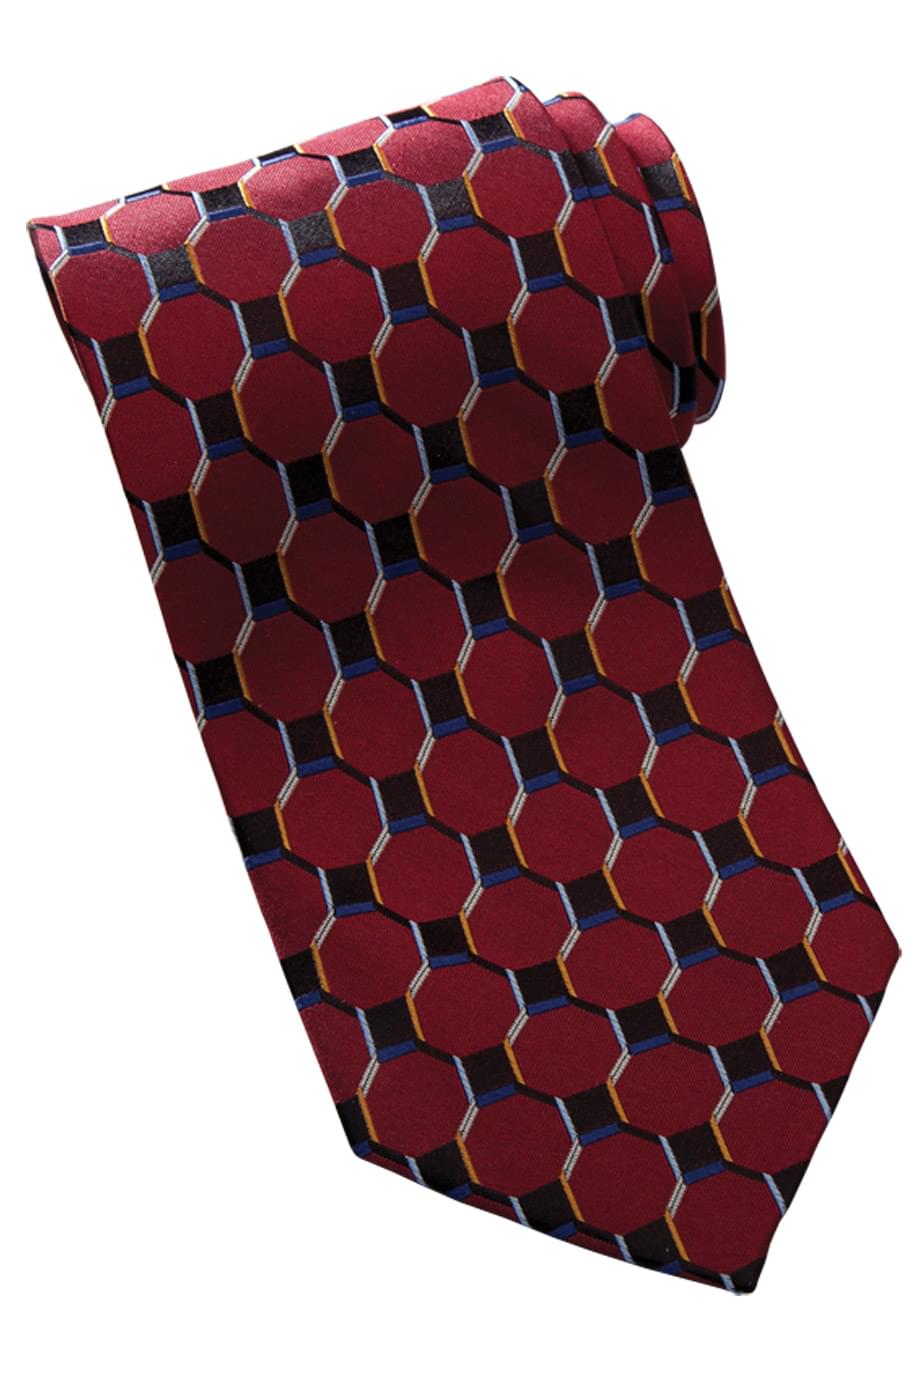 Uniforms - Silk Tie, Honeycomb Pattern, Wine, Red, Black